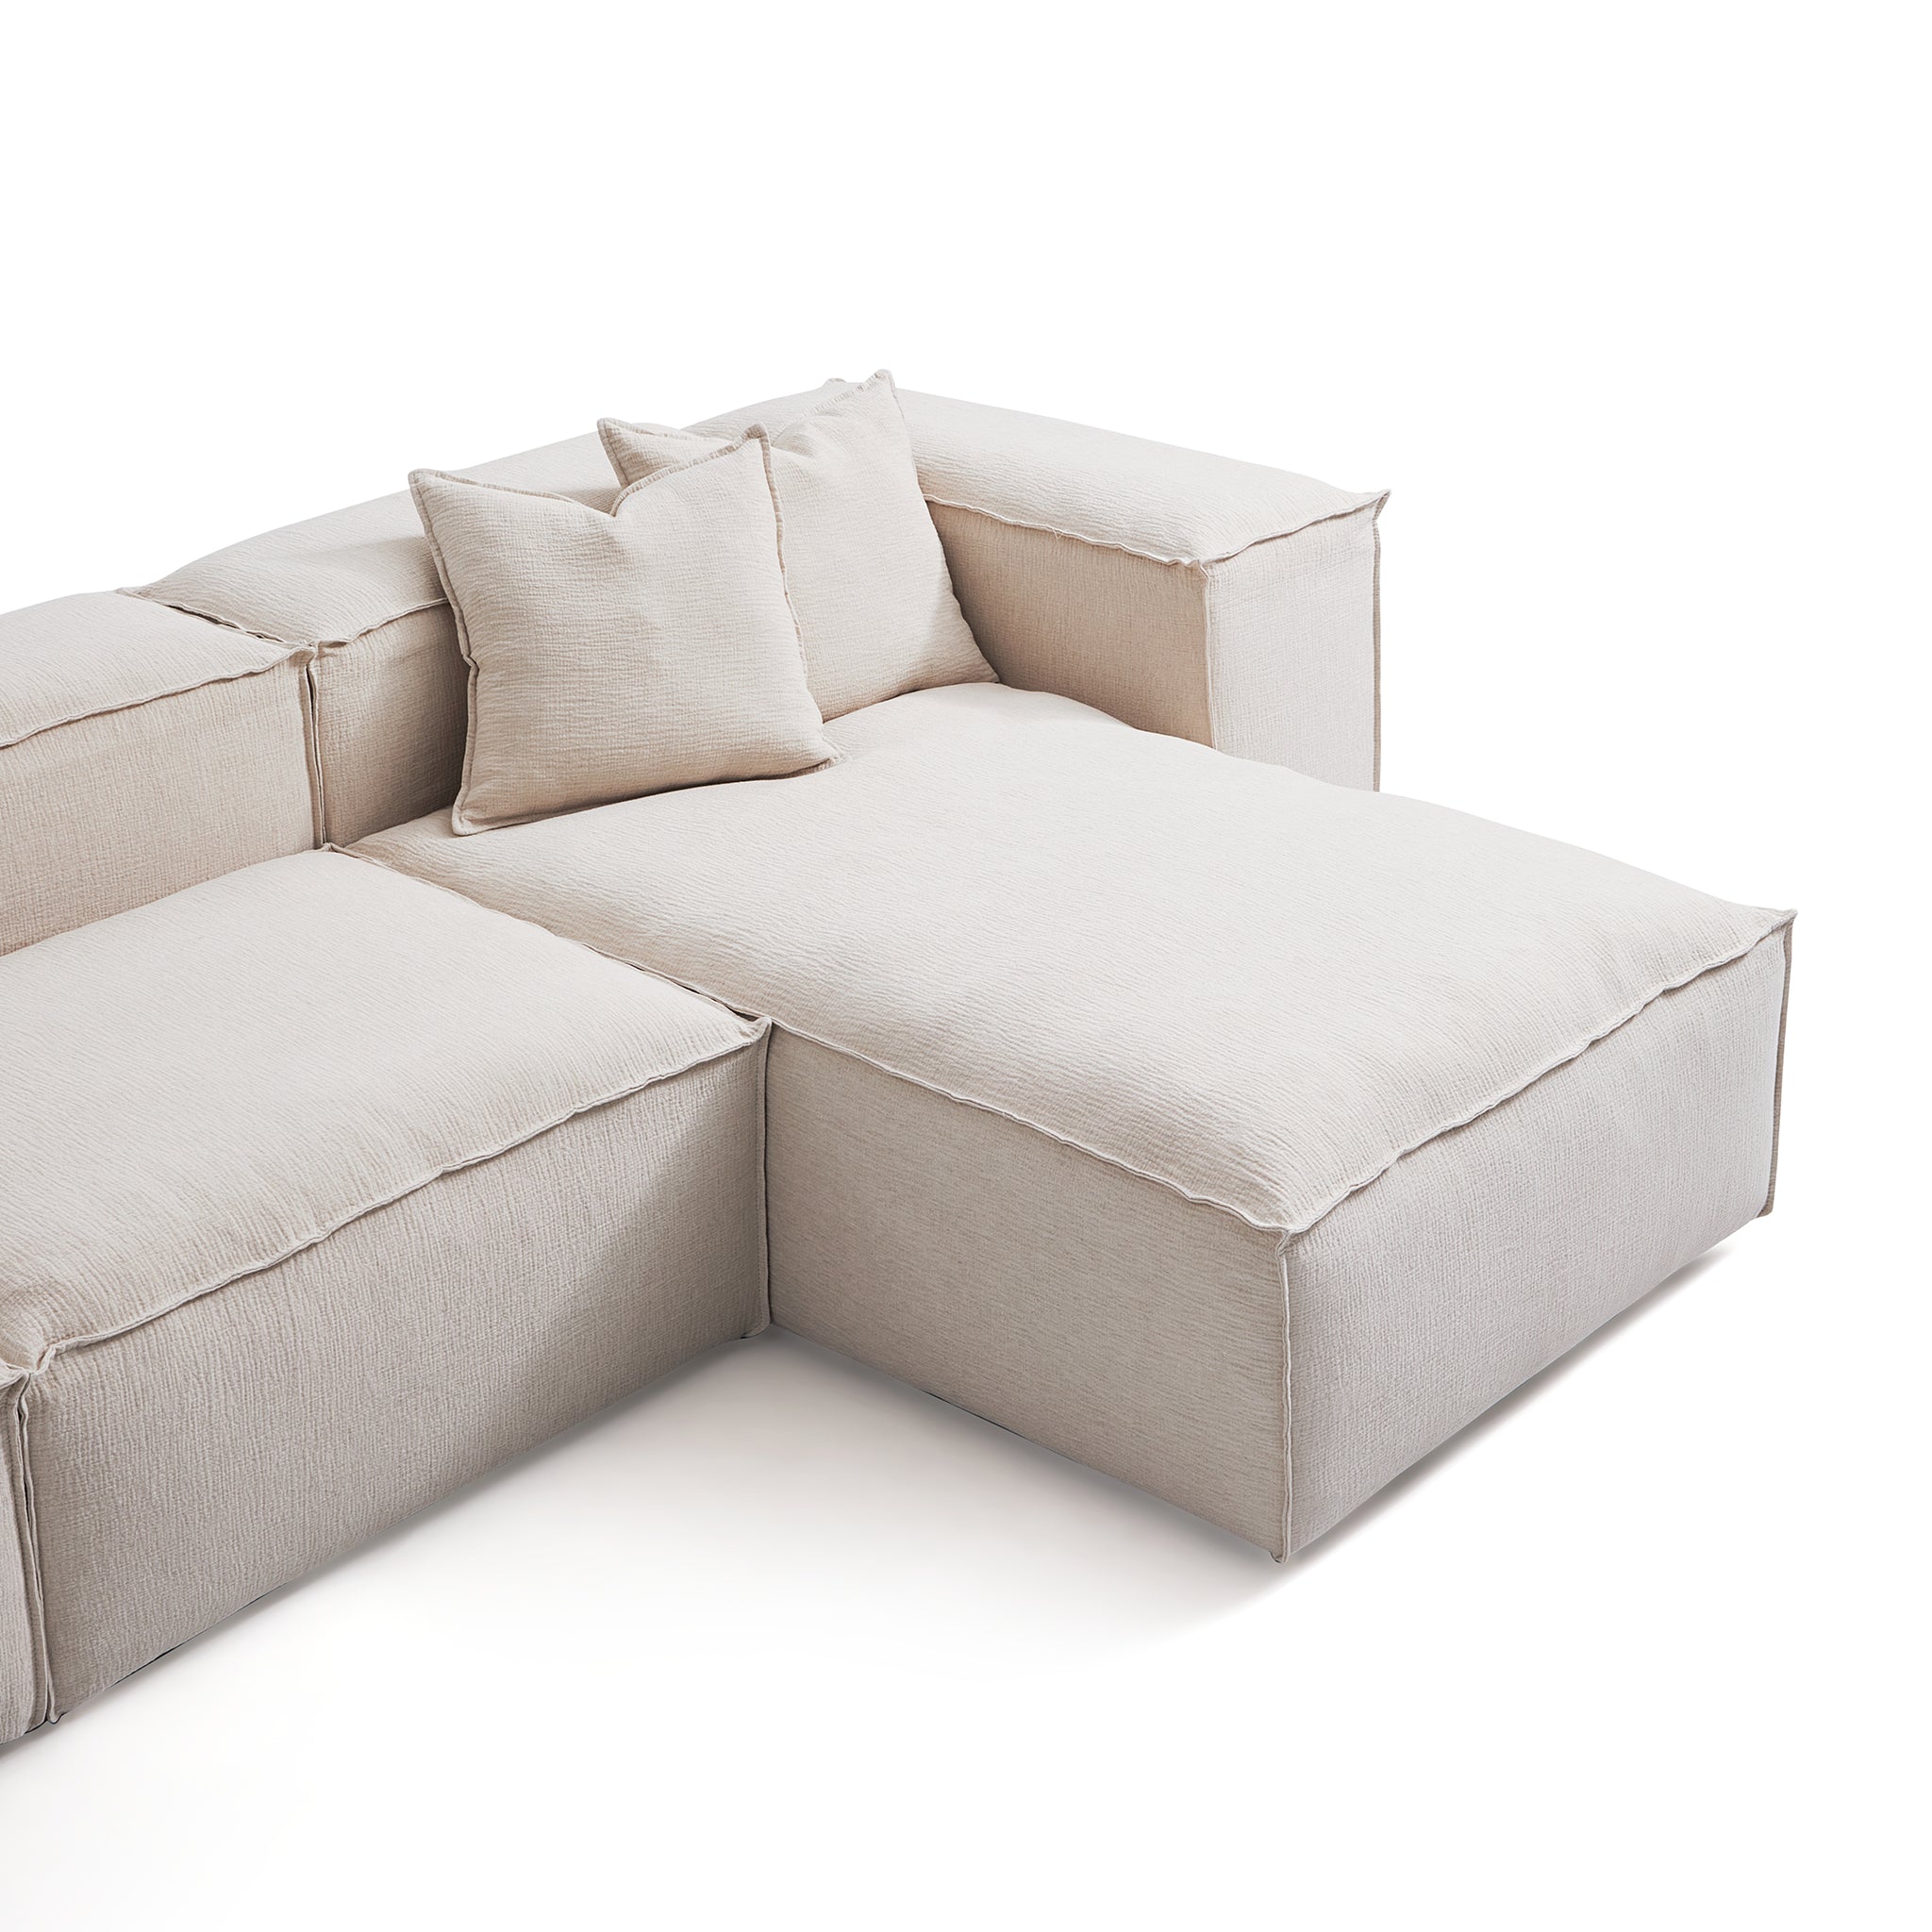 Freedom Modular Khaki Double-Sided Sectional Sofa